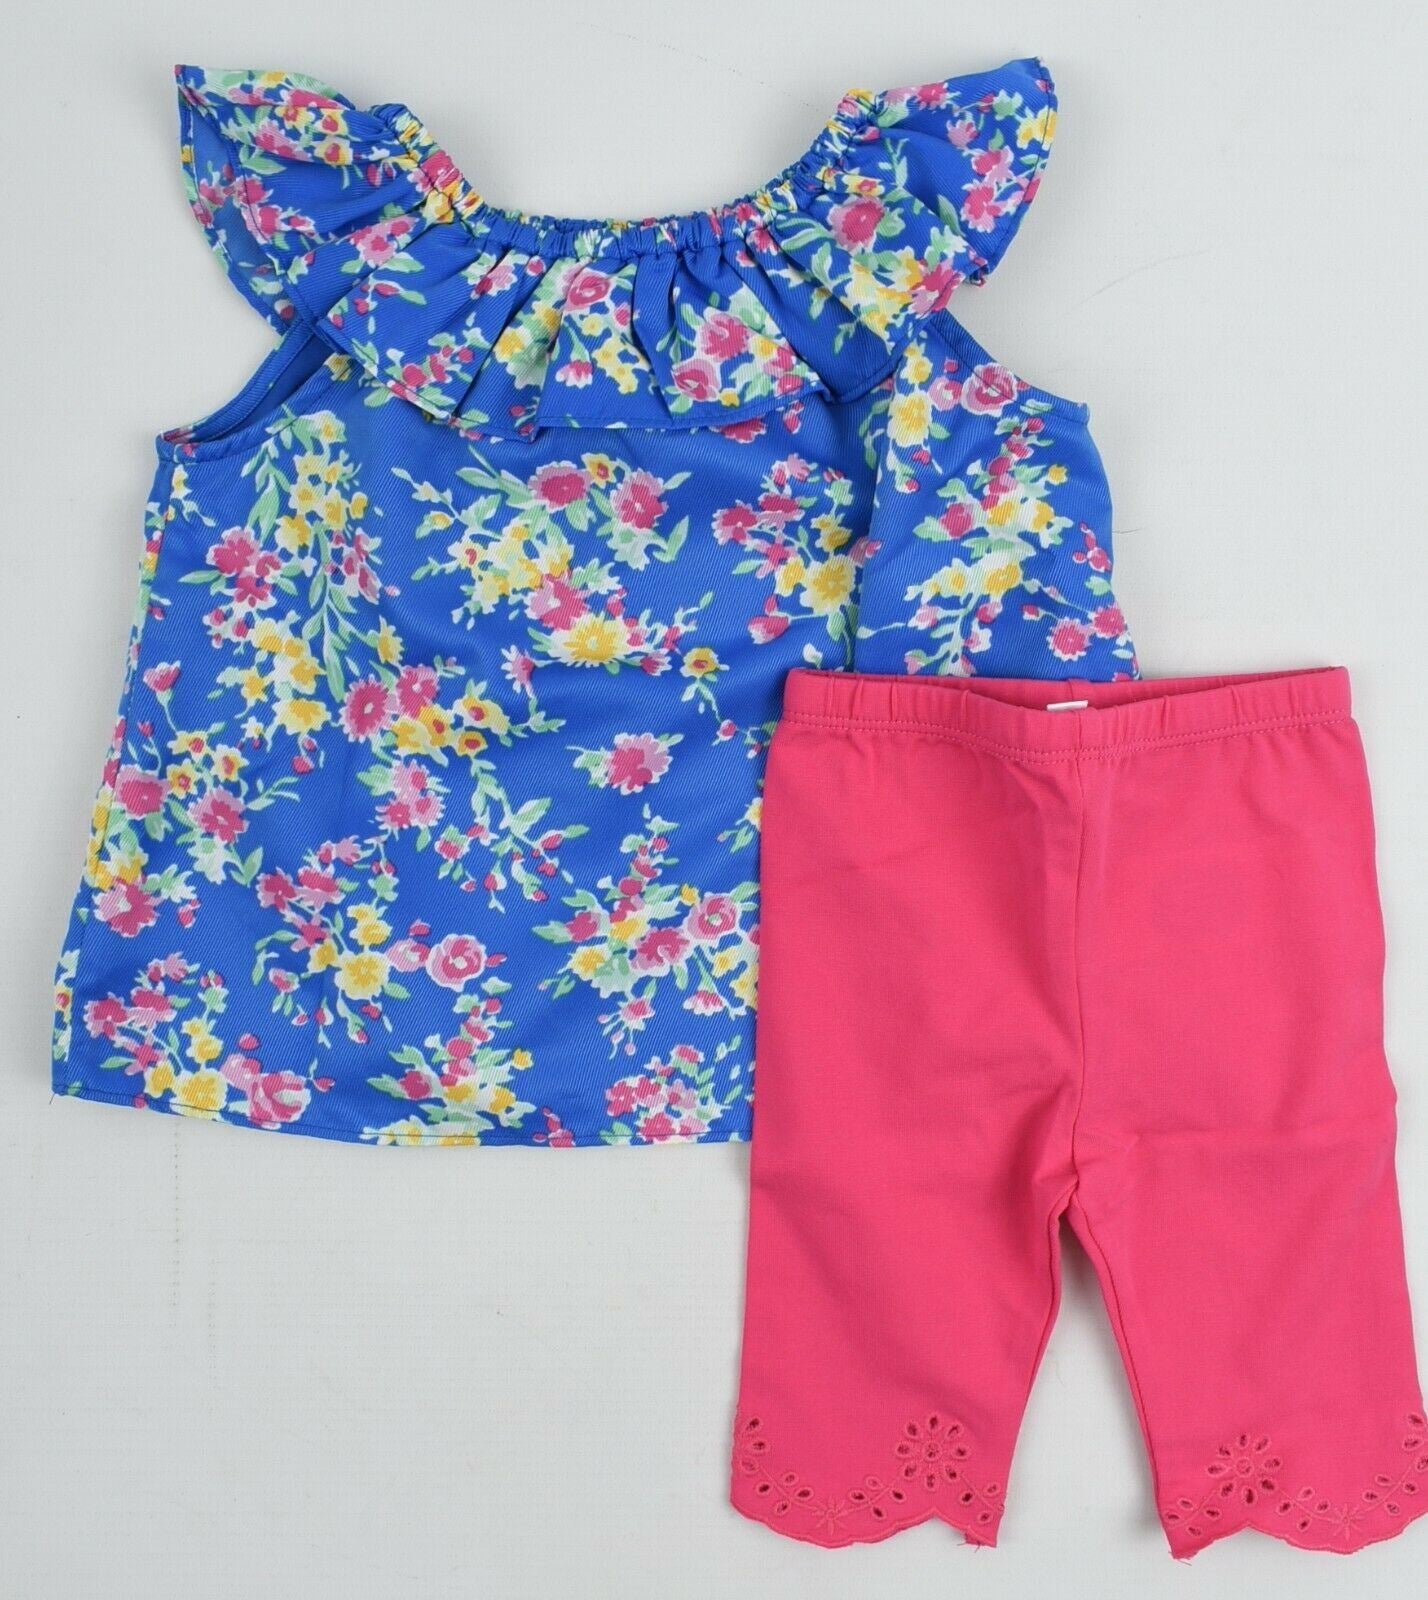 RALPH LAUREN Baby Girls' 2-pc Outfit Set, Top+Leggings, Blue/Pink, size 6 months